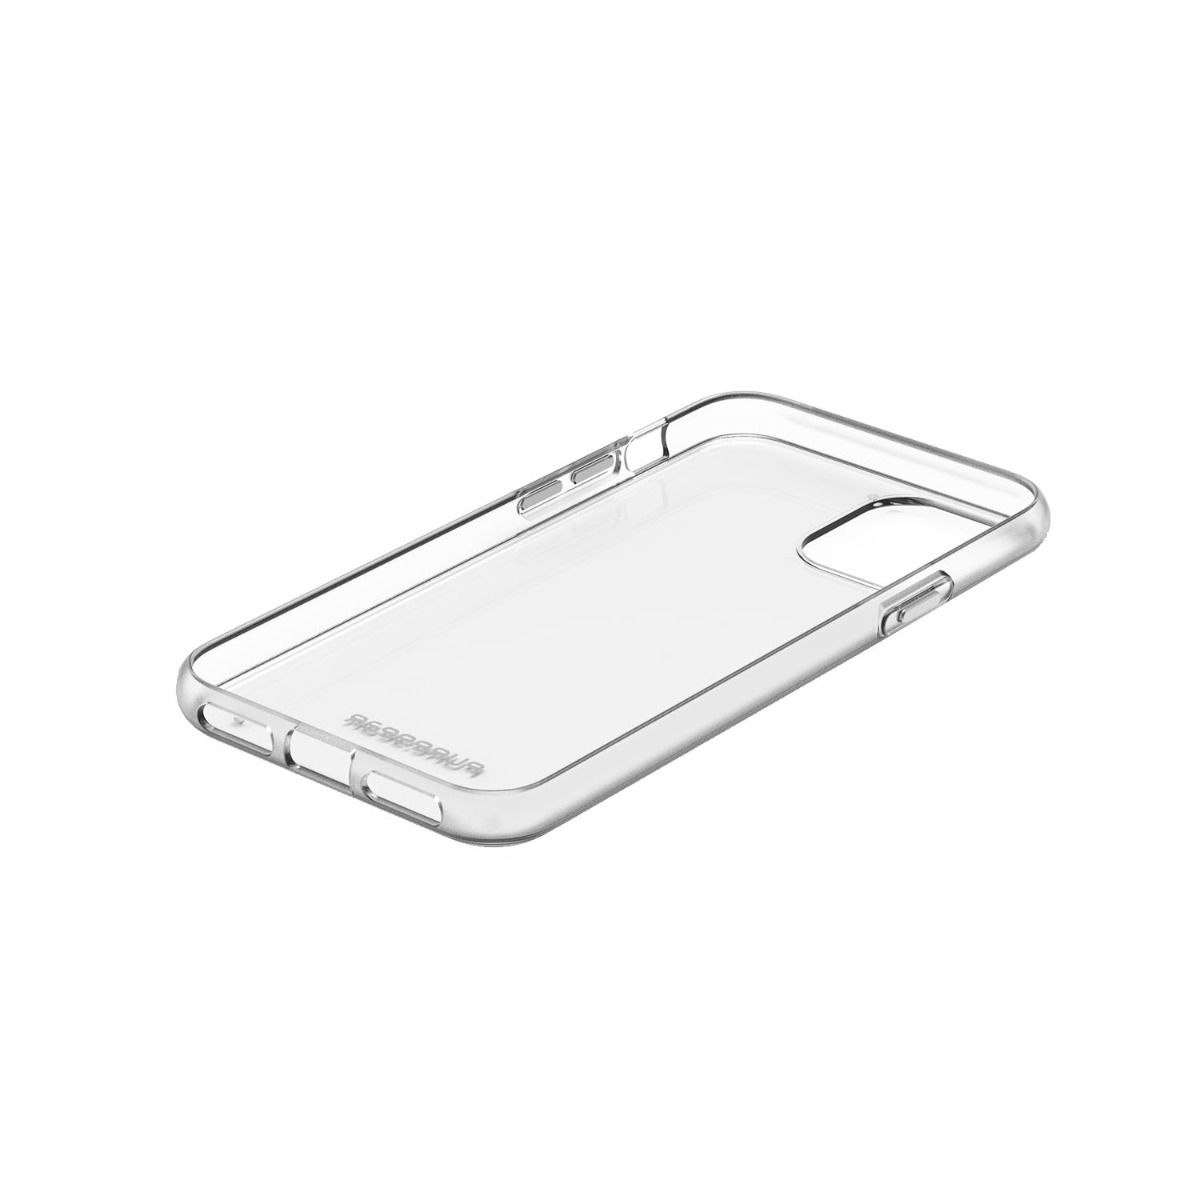 PureGear Slim Shell Case iPhone 11 Pro Max